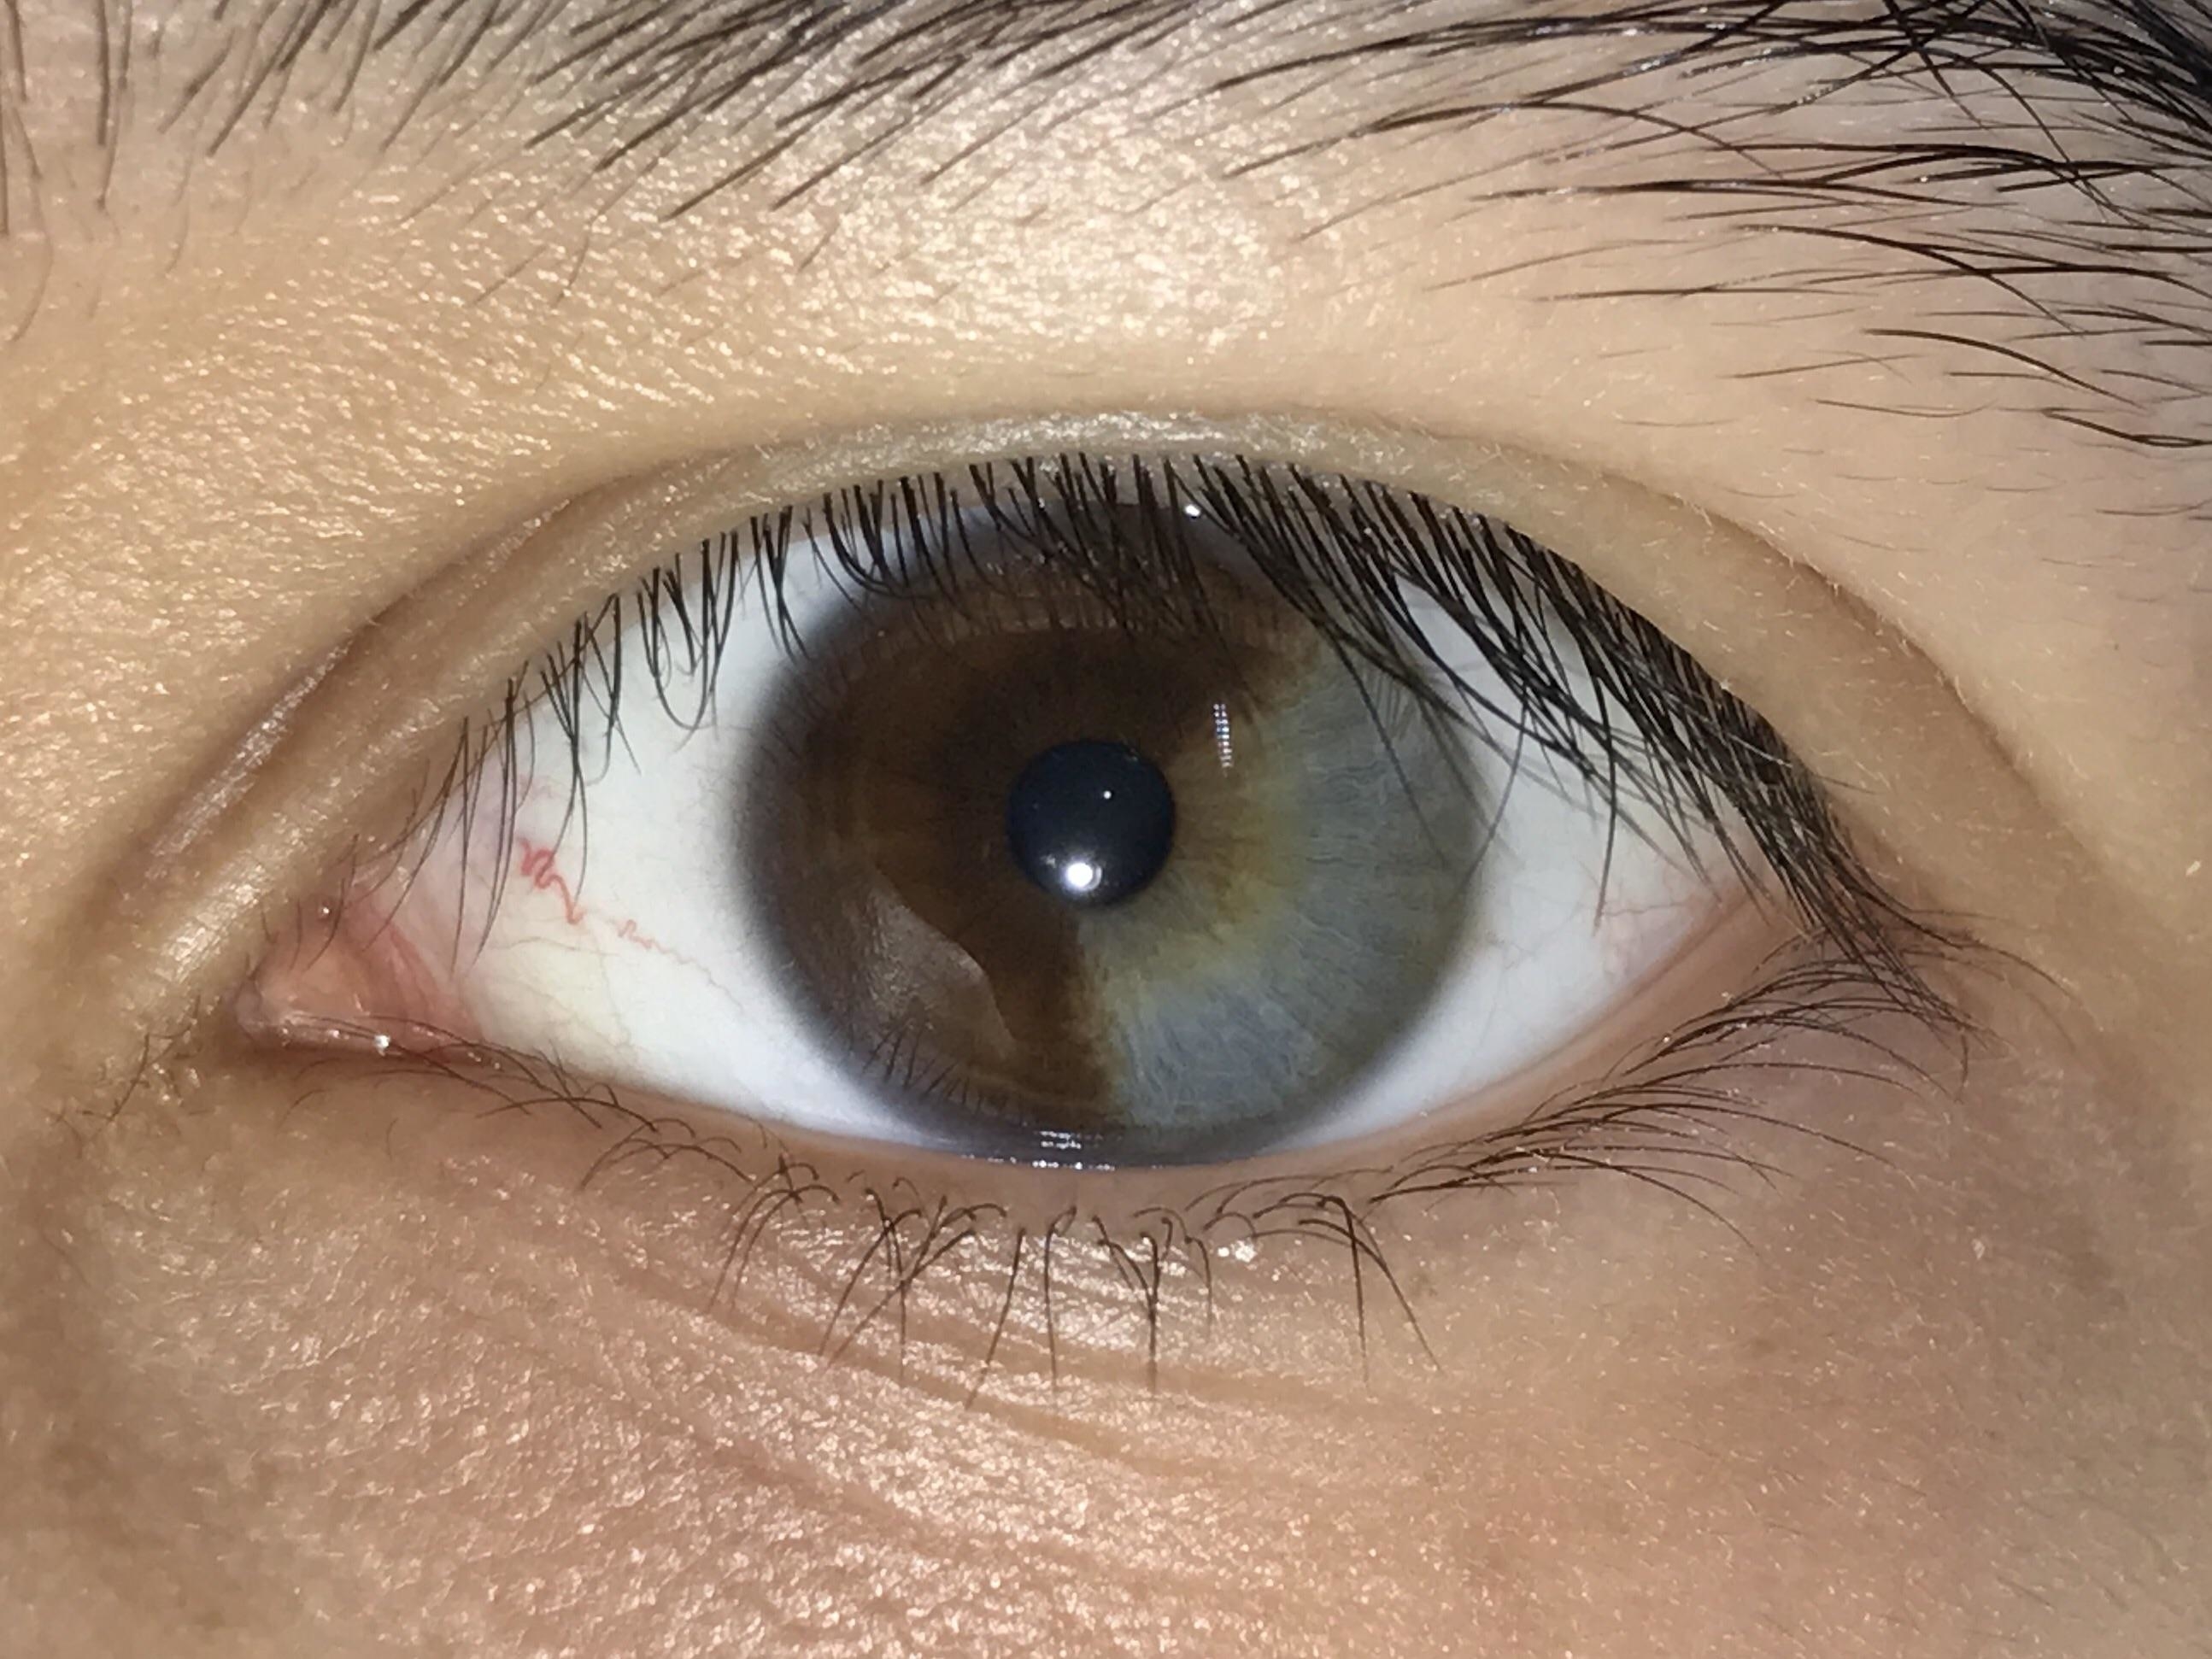 An eye with heterochromia